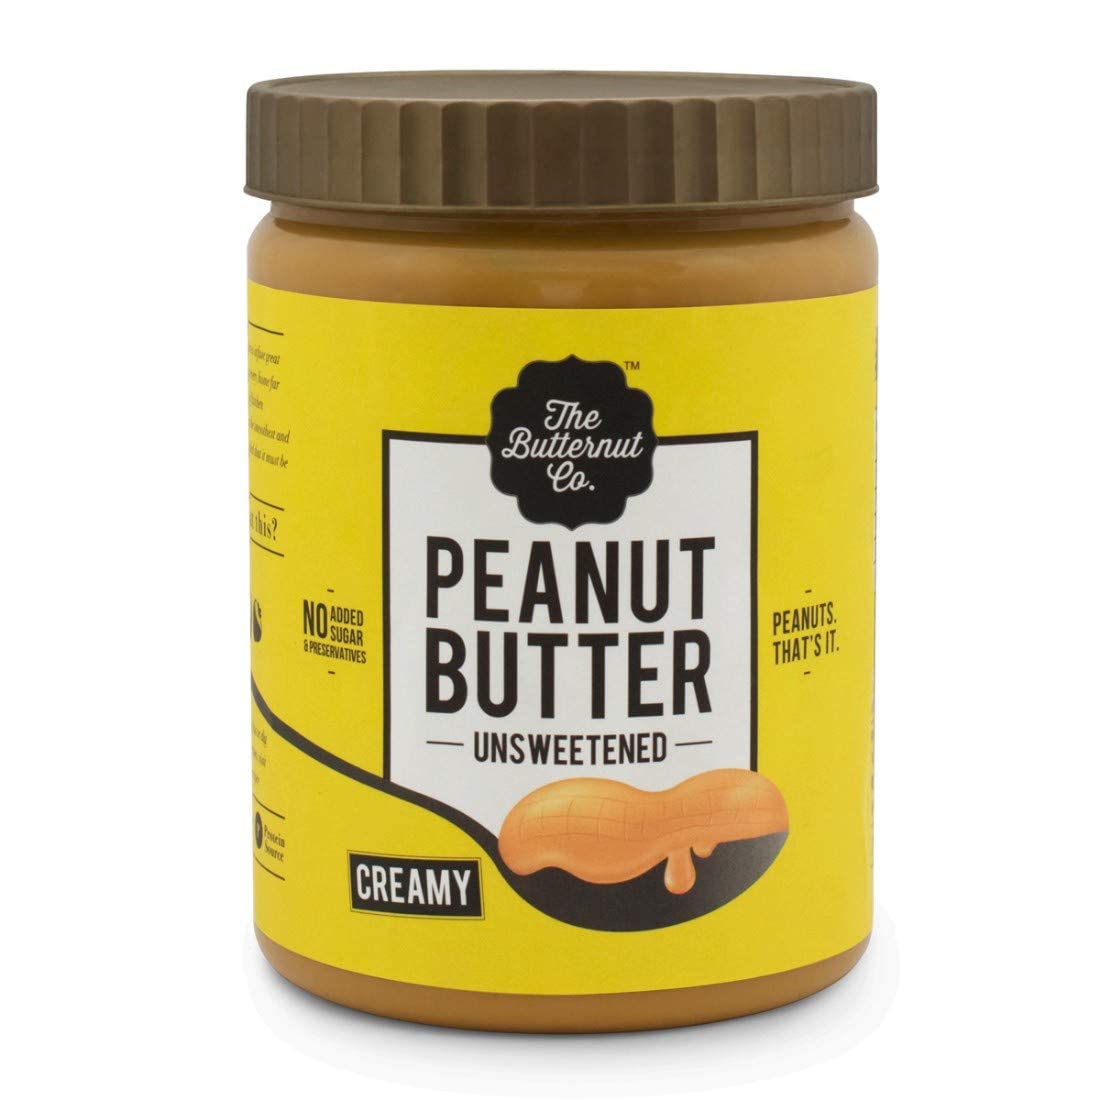 The Butternut Co. 1 Kg Crunchy & 1 Kg Creamy Unsweetened Peanut Butter, 2 Kg Combo Value Pack